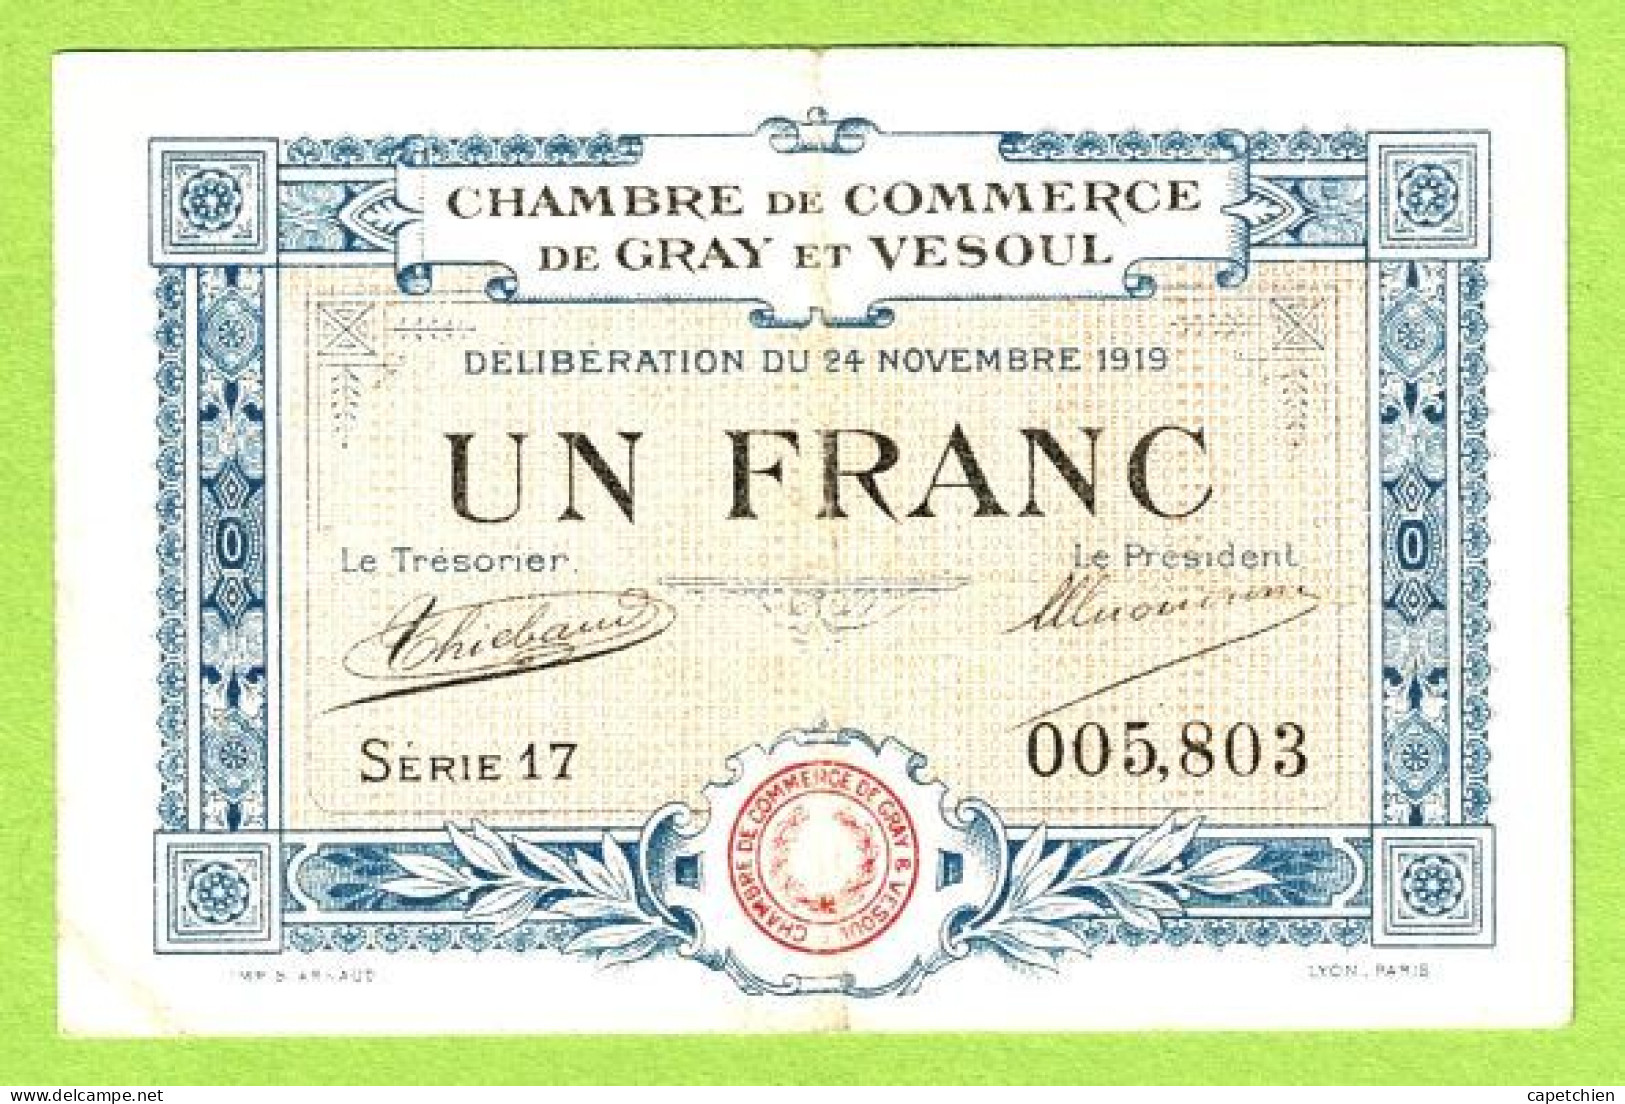 FRANCE / CHAMBRE De COMMERCE / GRAY -  VESOUL / 1 FRANC / 24 NOVEMBRE 1919 / SERIE 17 / N° 005803 - Camera Di Commercio